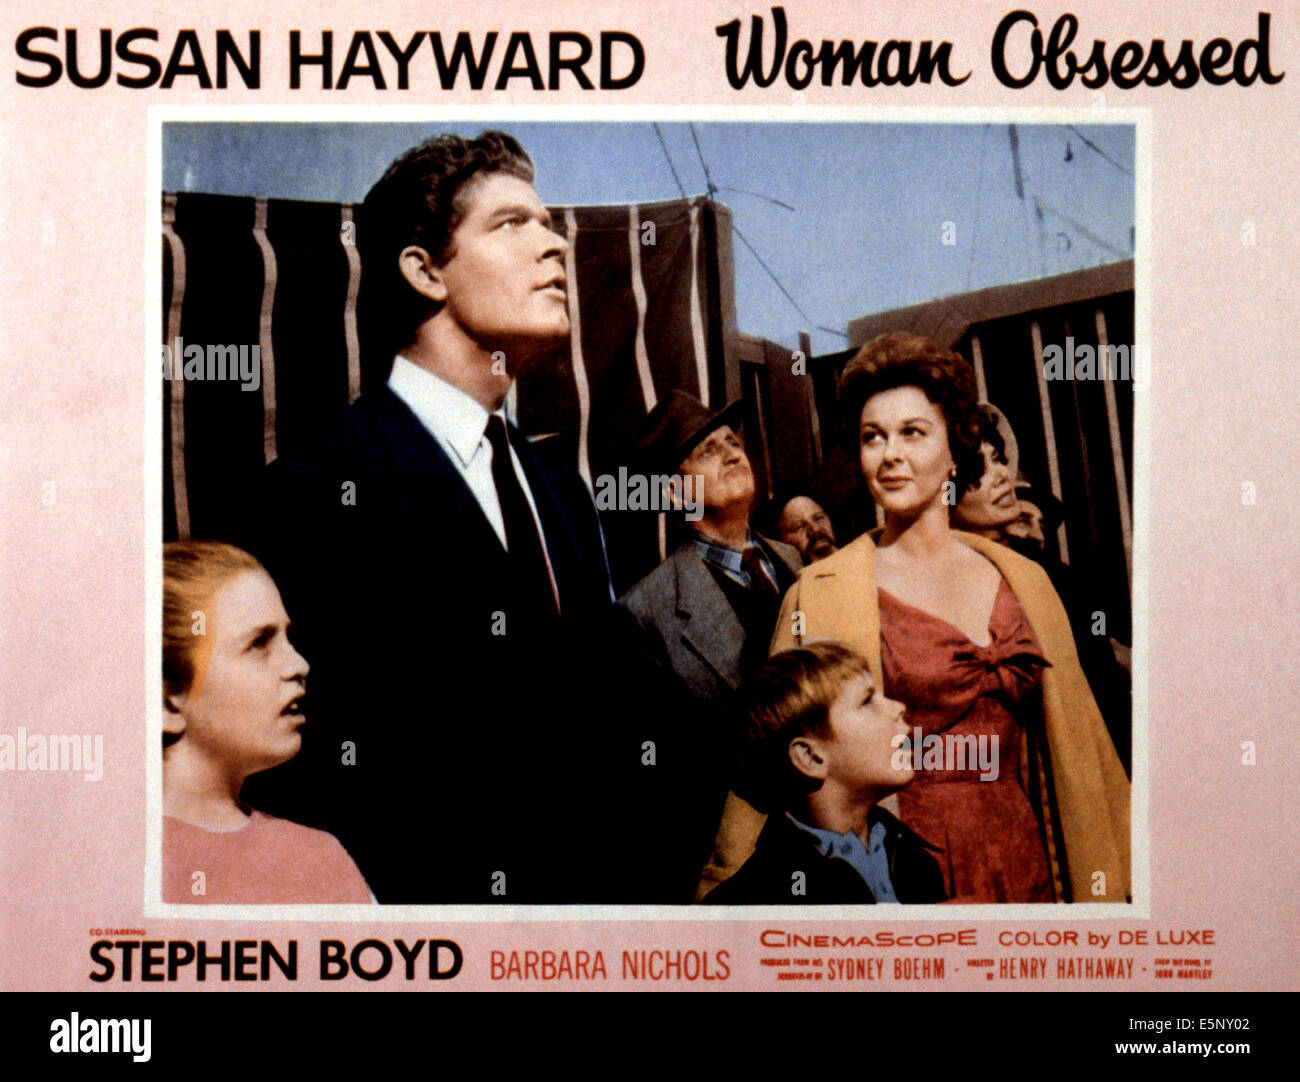 Donna ossessionati, Stephen Boyd, Dennis Holmes, Susan Hayward, 1959 Foto Stock